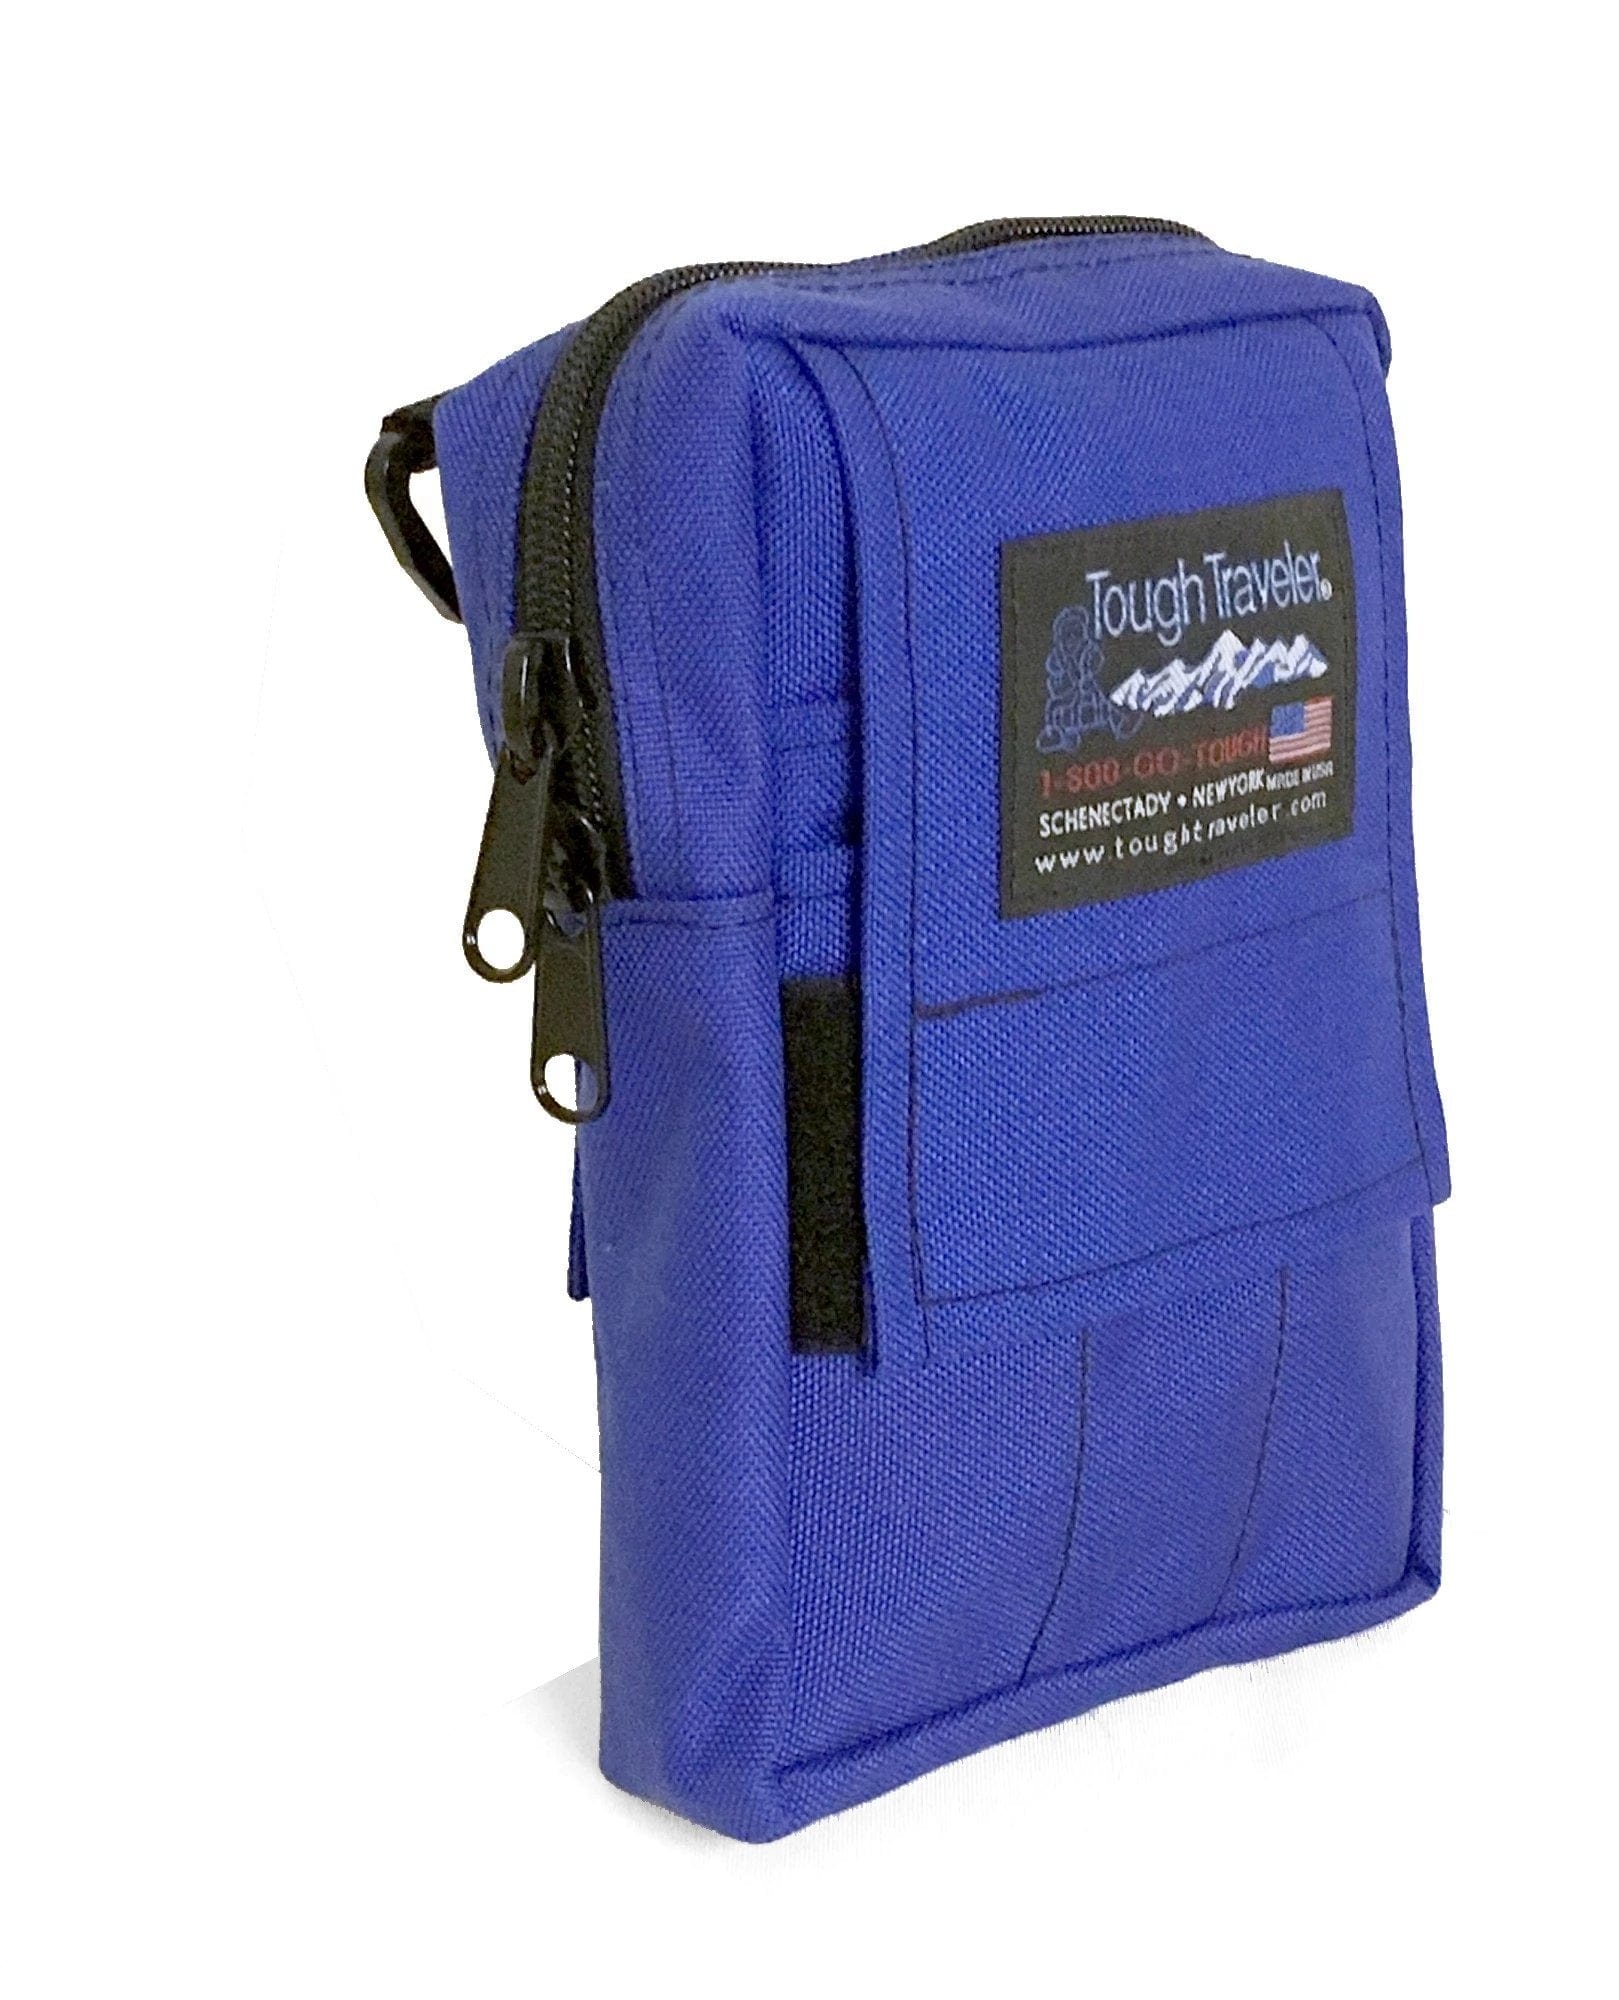 Customizable Felt Tote Bag Organizer, Purse Insert (Water Bottle Holder & Zip Pocket)